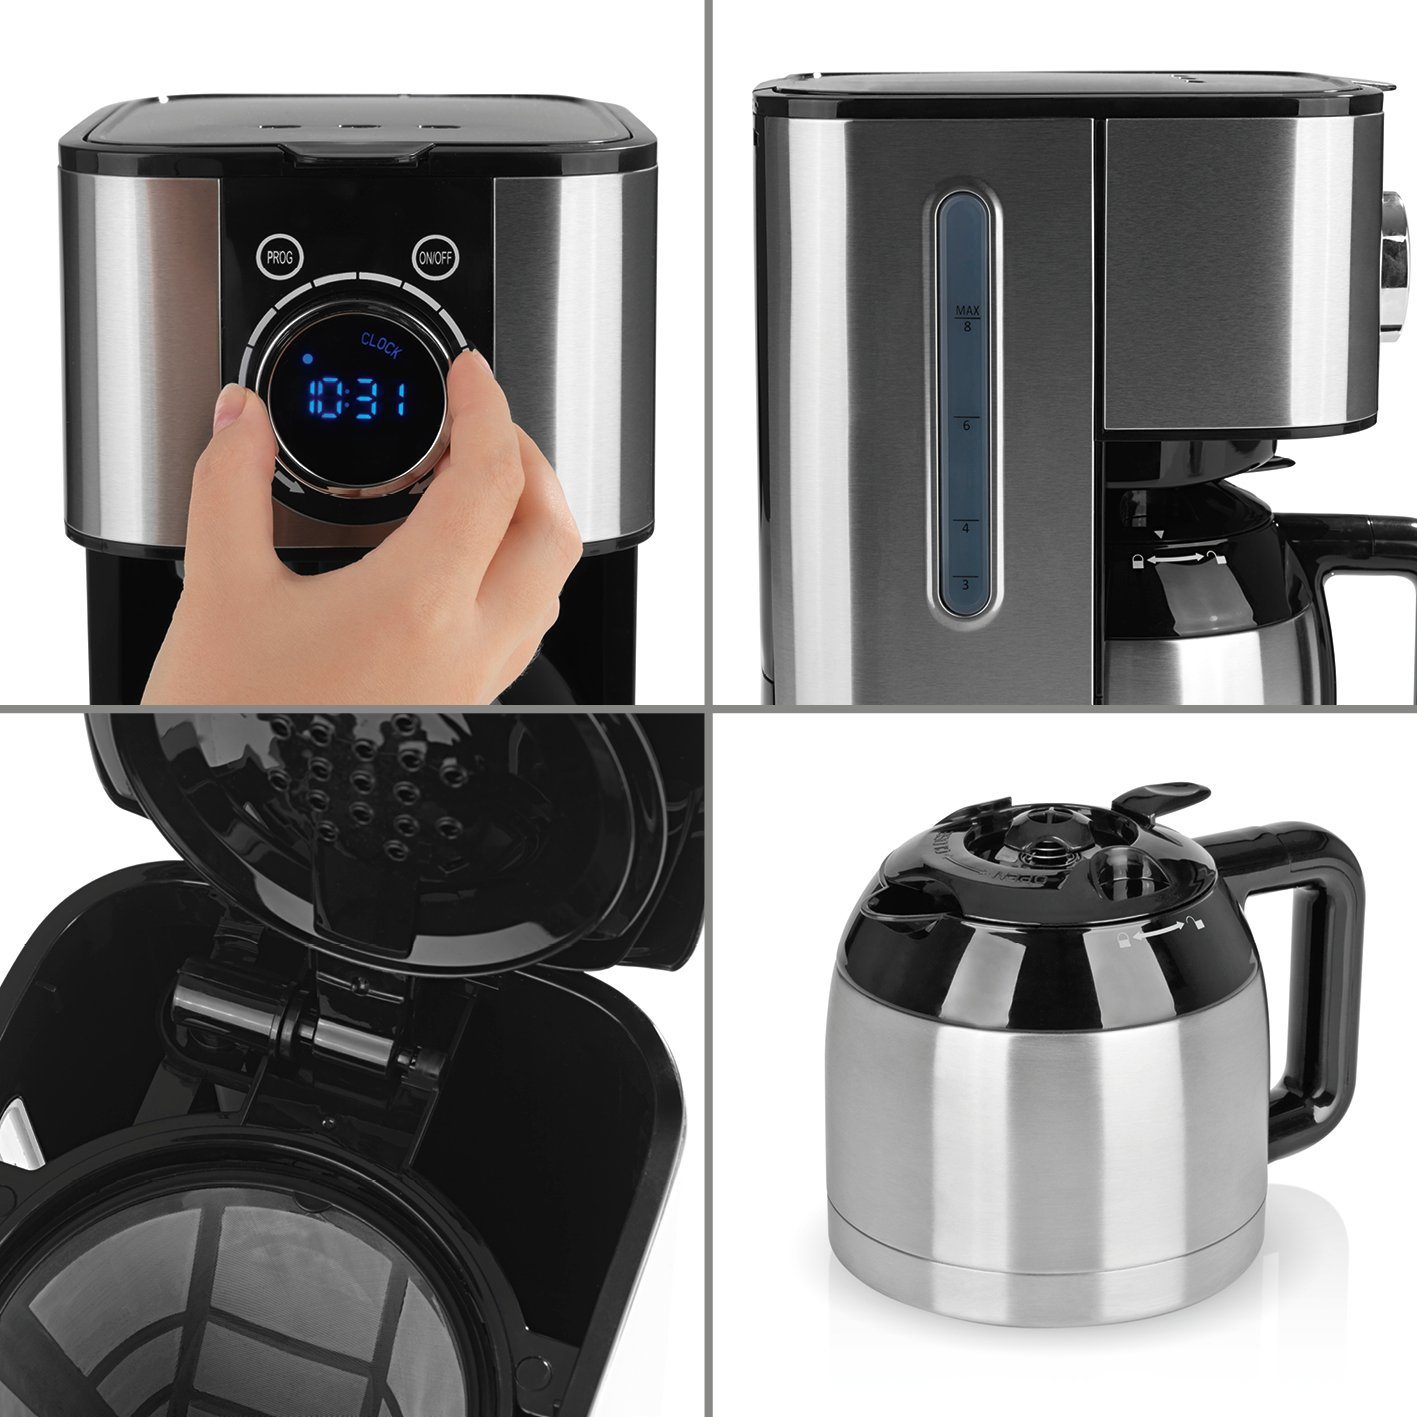 Thermo Wasserkocher BEEM SWITCH-SET Filterkaffeemaschine 1,7L Filterkaffeemaschine Tee-&